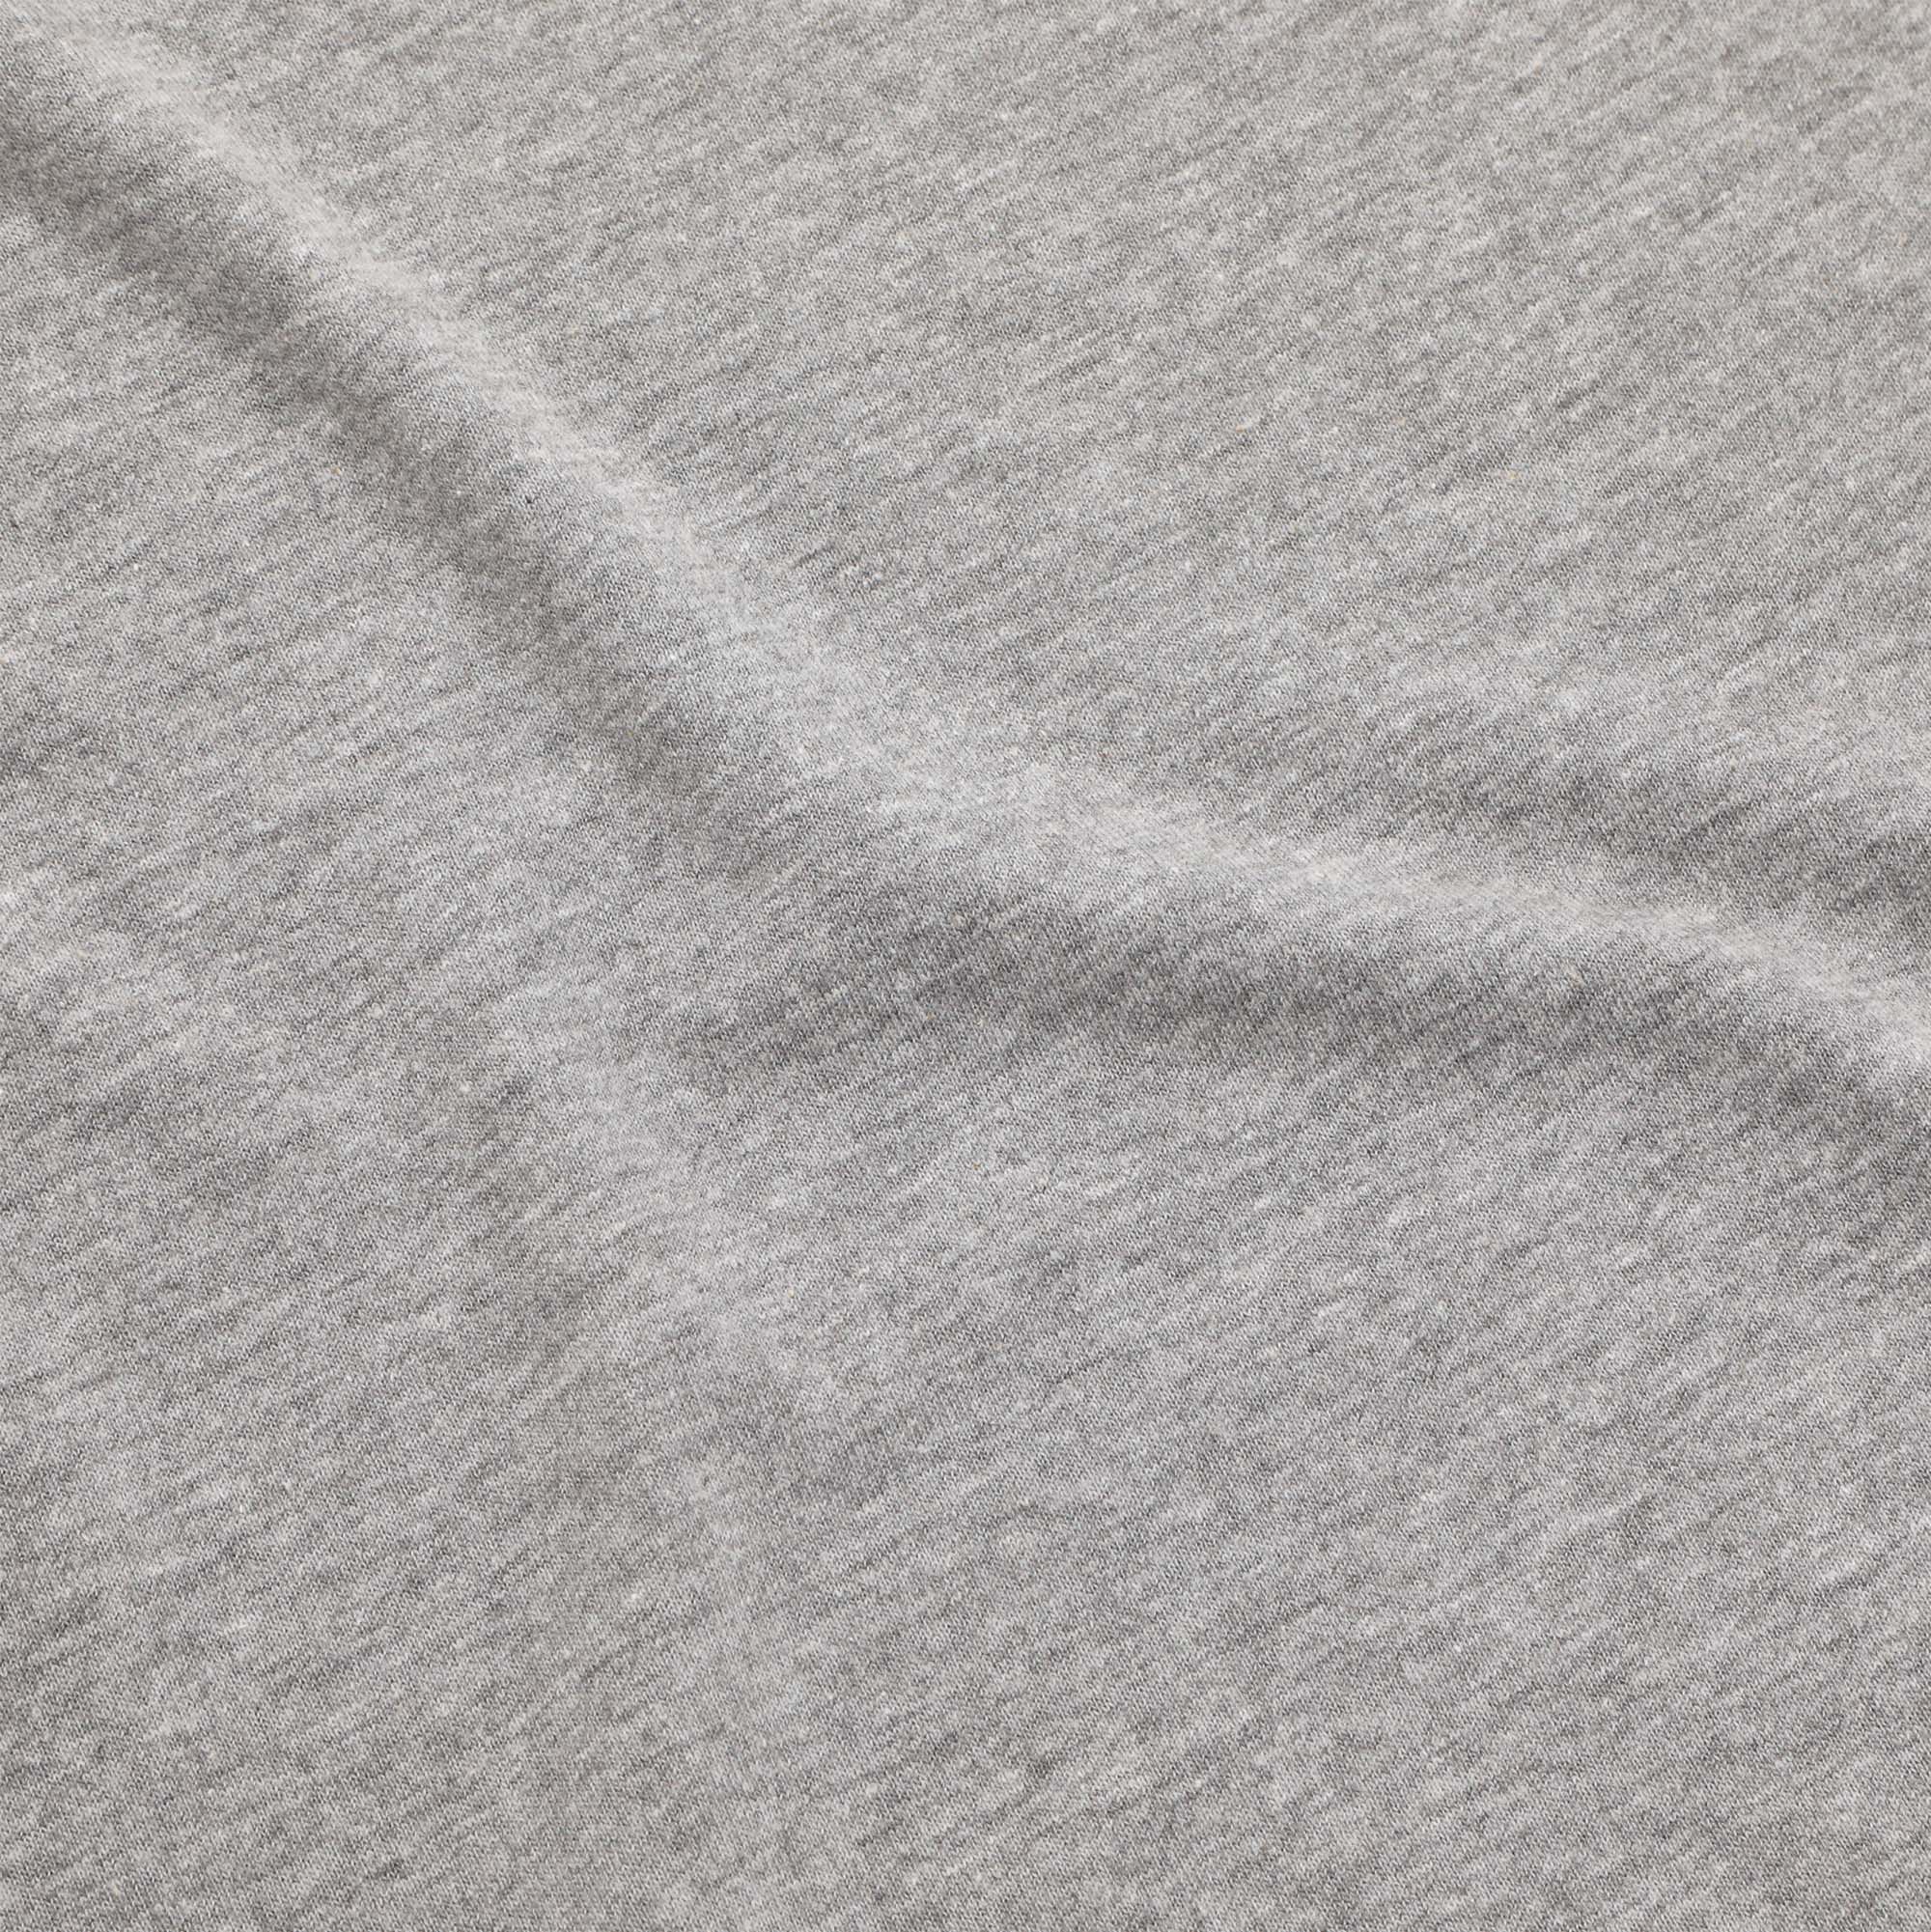 Cotton T-Shirt - Grey